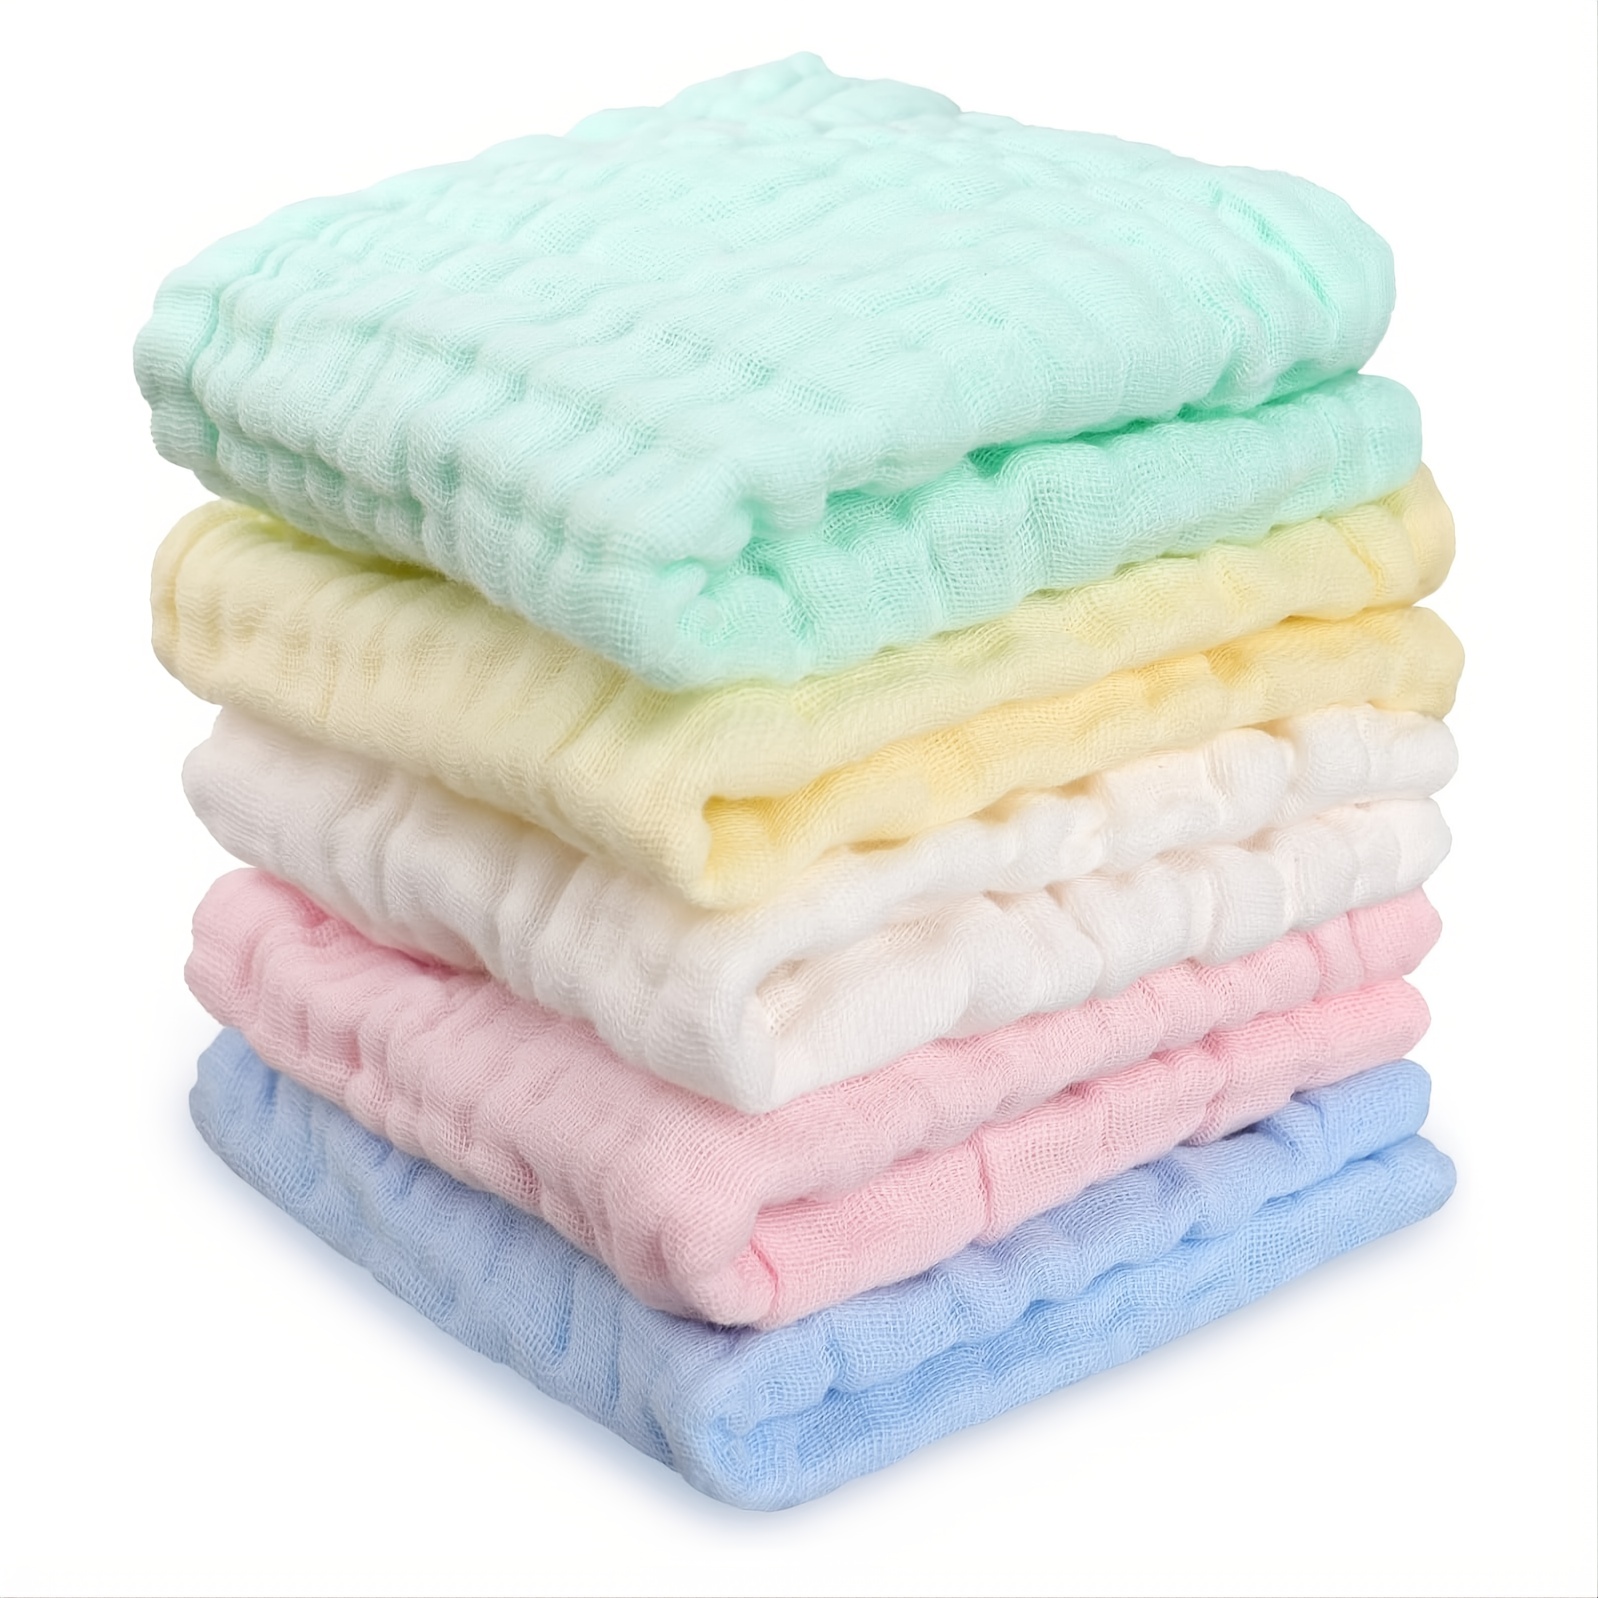 MUKIN Baby Muslin Washcloths - Natural Muslin Cotton Baby Wipes - Soft Newborn Baby Face Towel and Muslin Washcloth for Sensitive